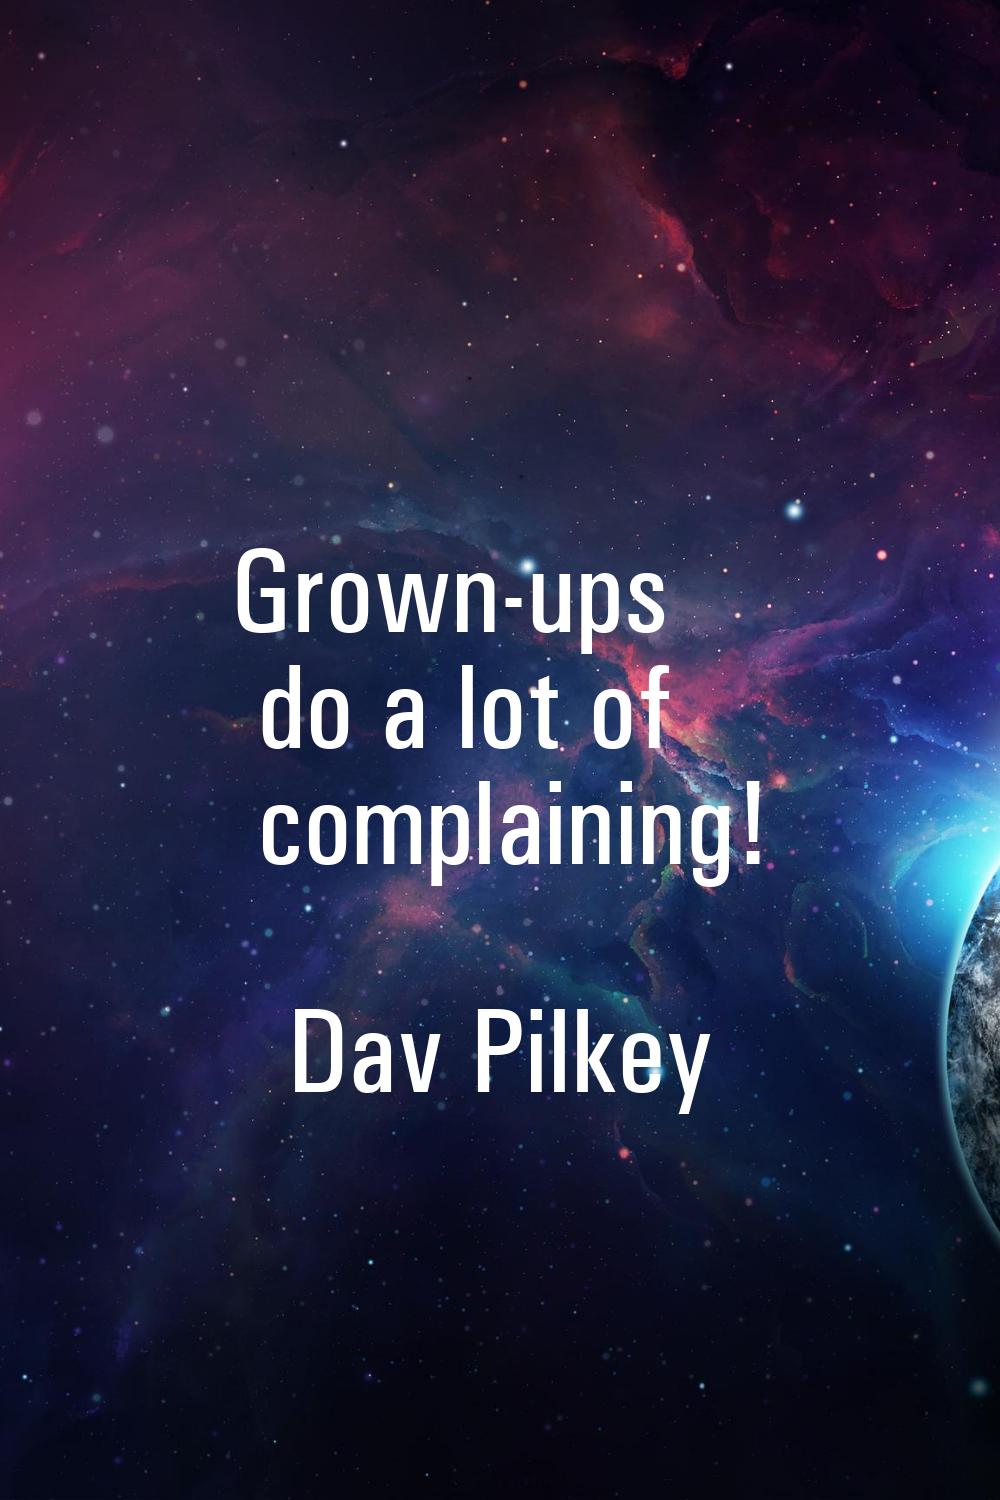 Grown-ups do a lot of complaining!